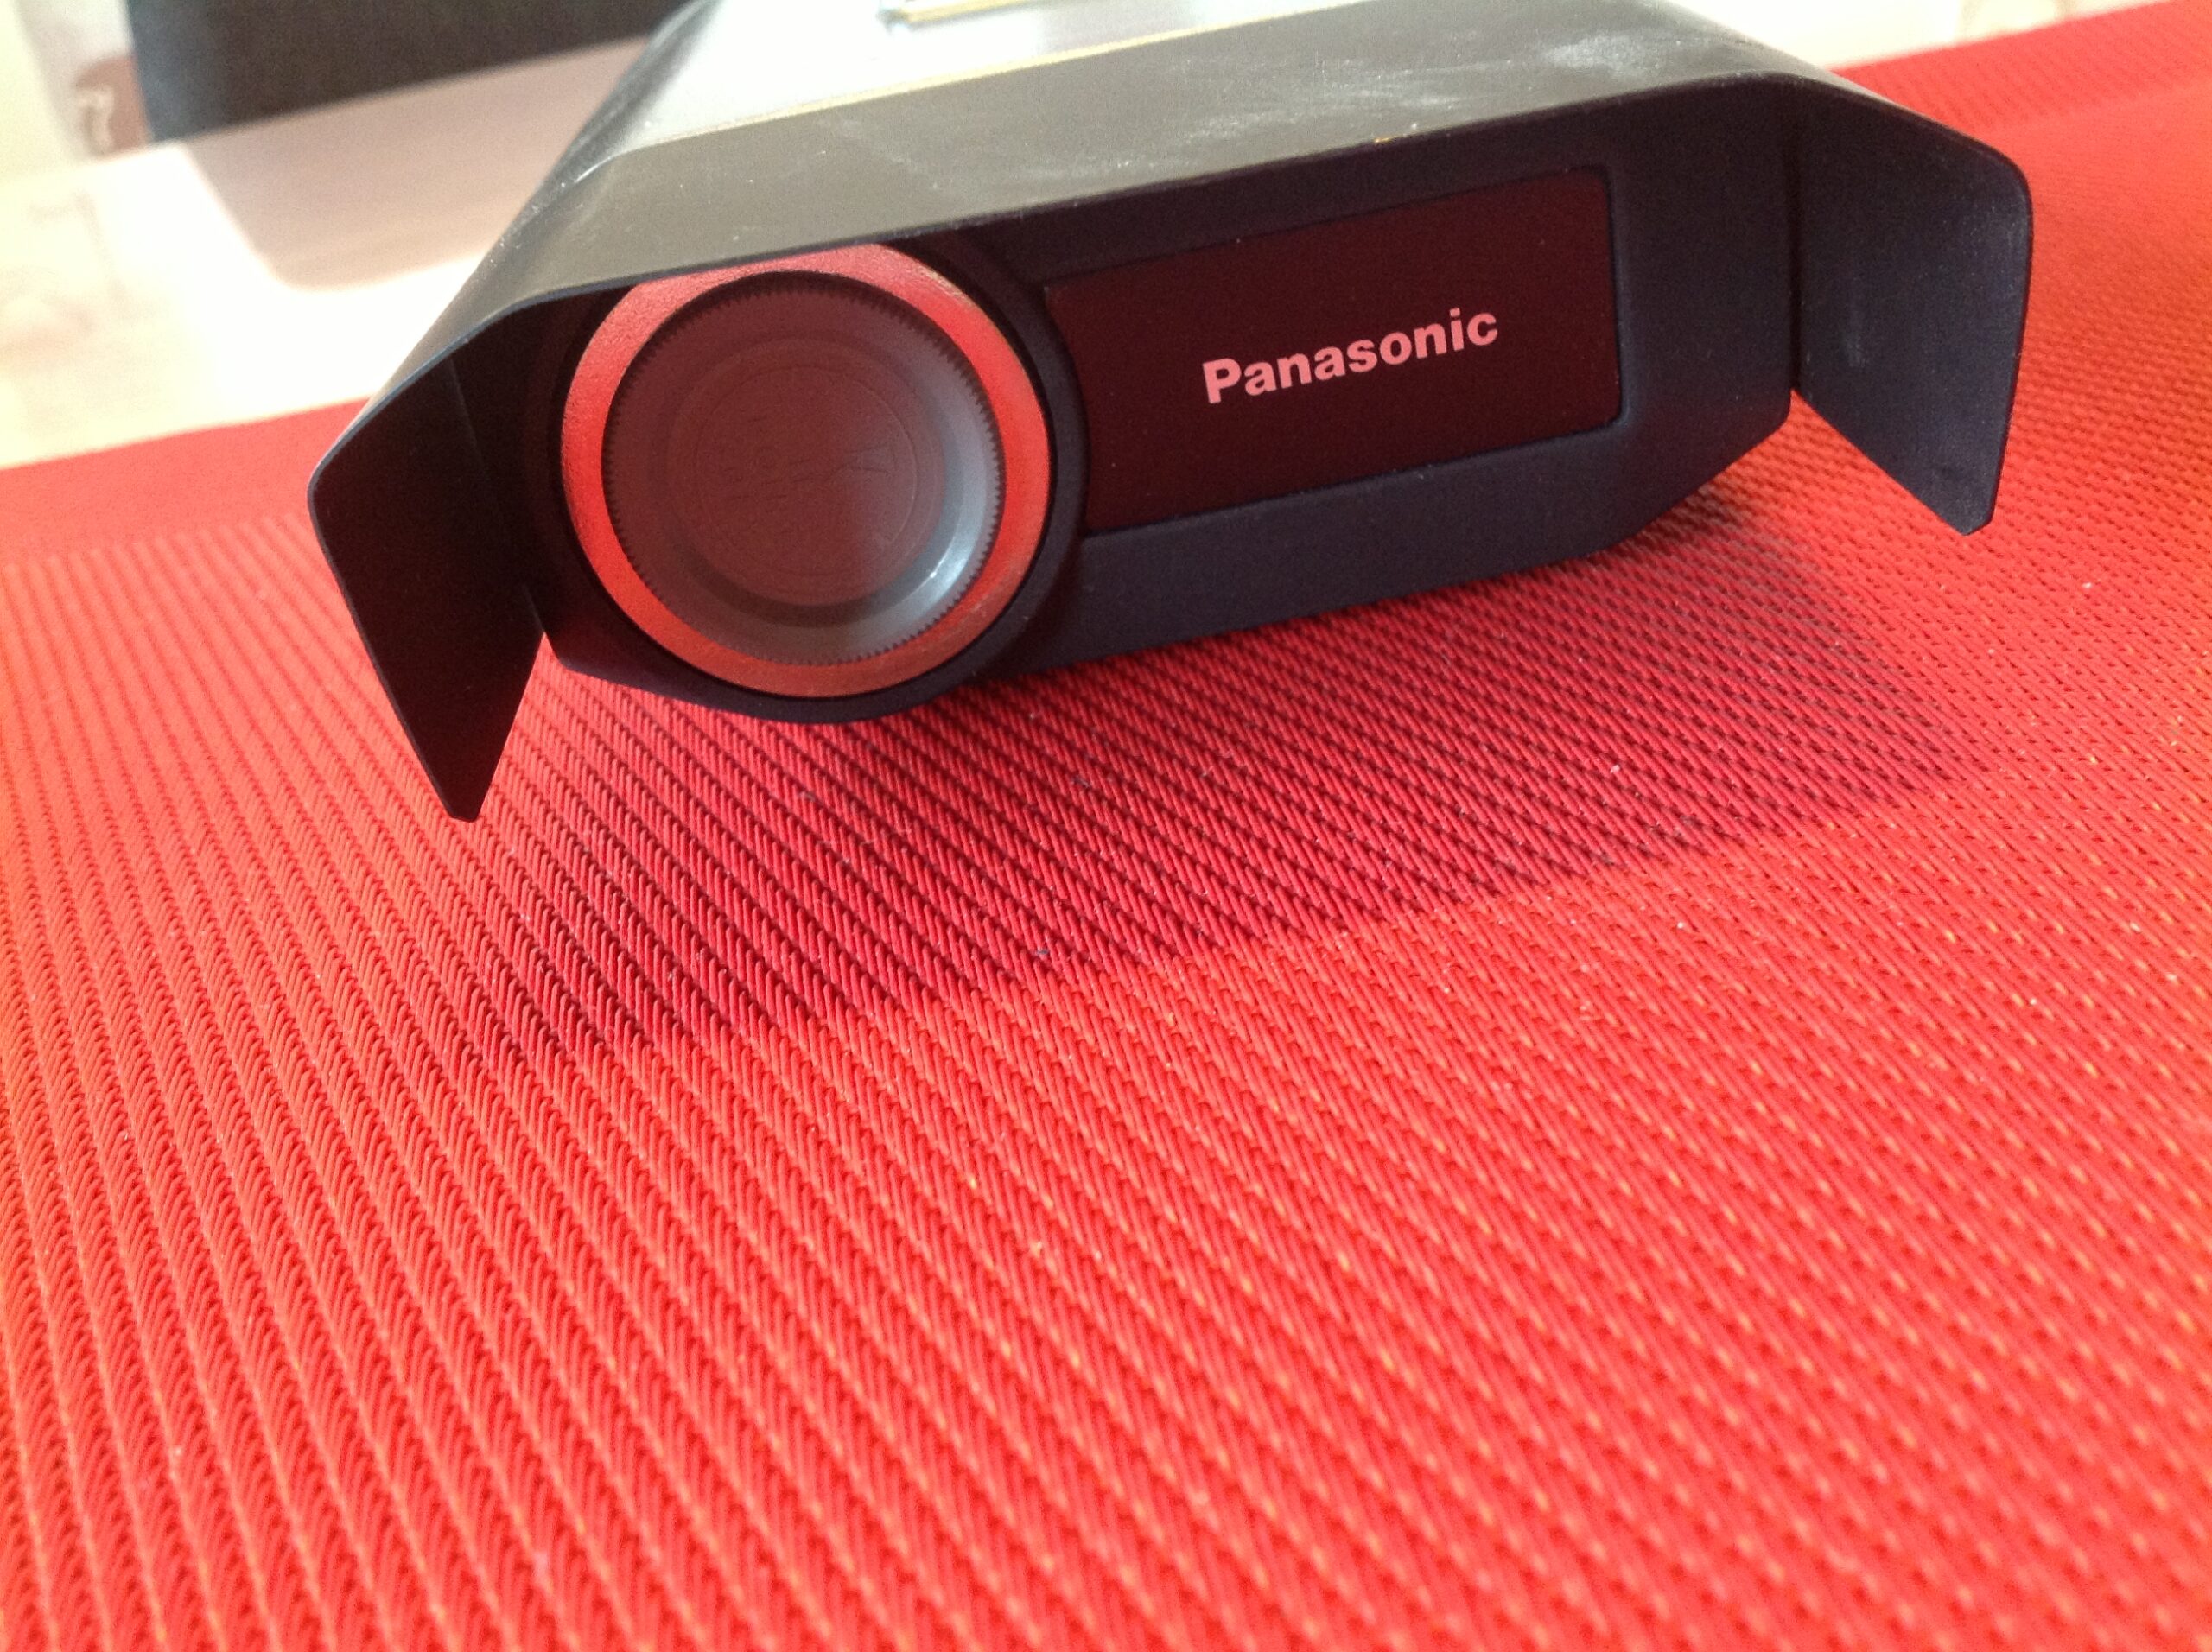 Panasonic TV Camera Model WV-71